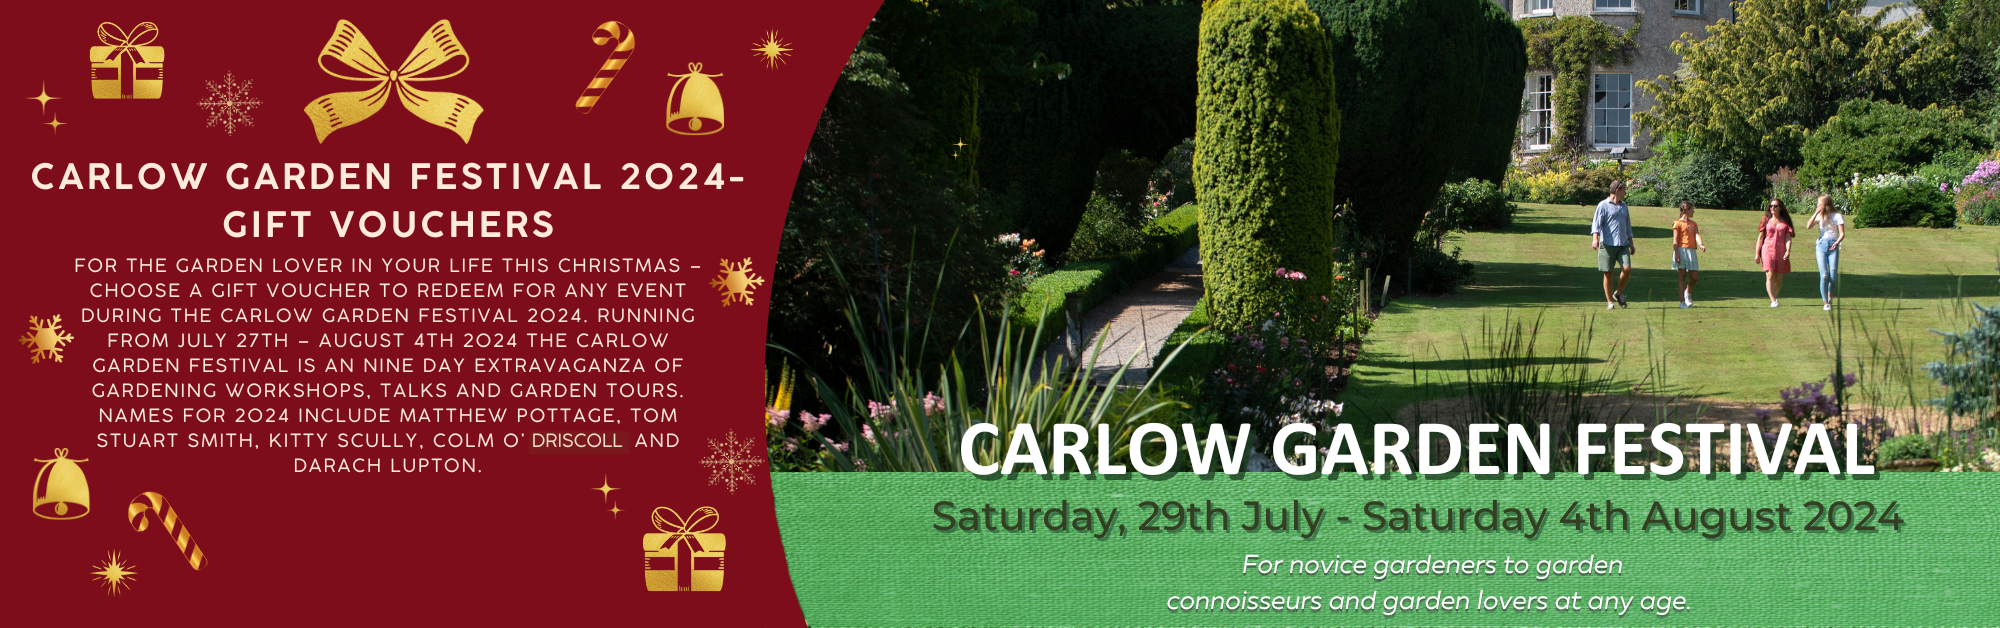 Carlow Garden Festival 2024 - Gift Voucher